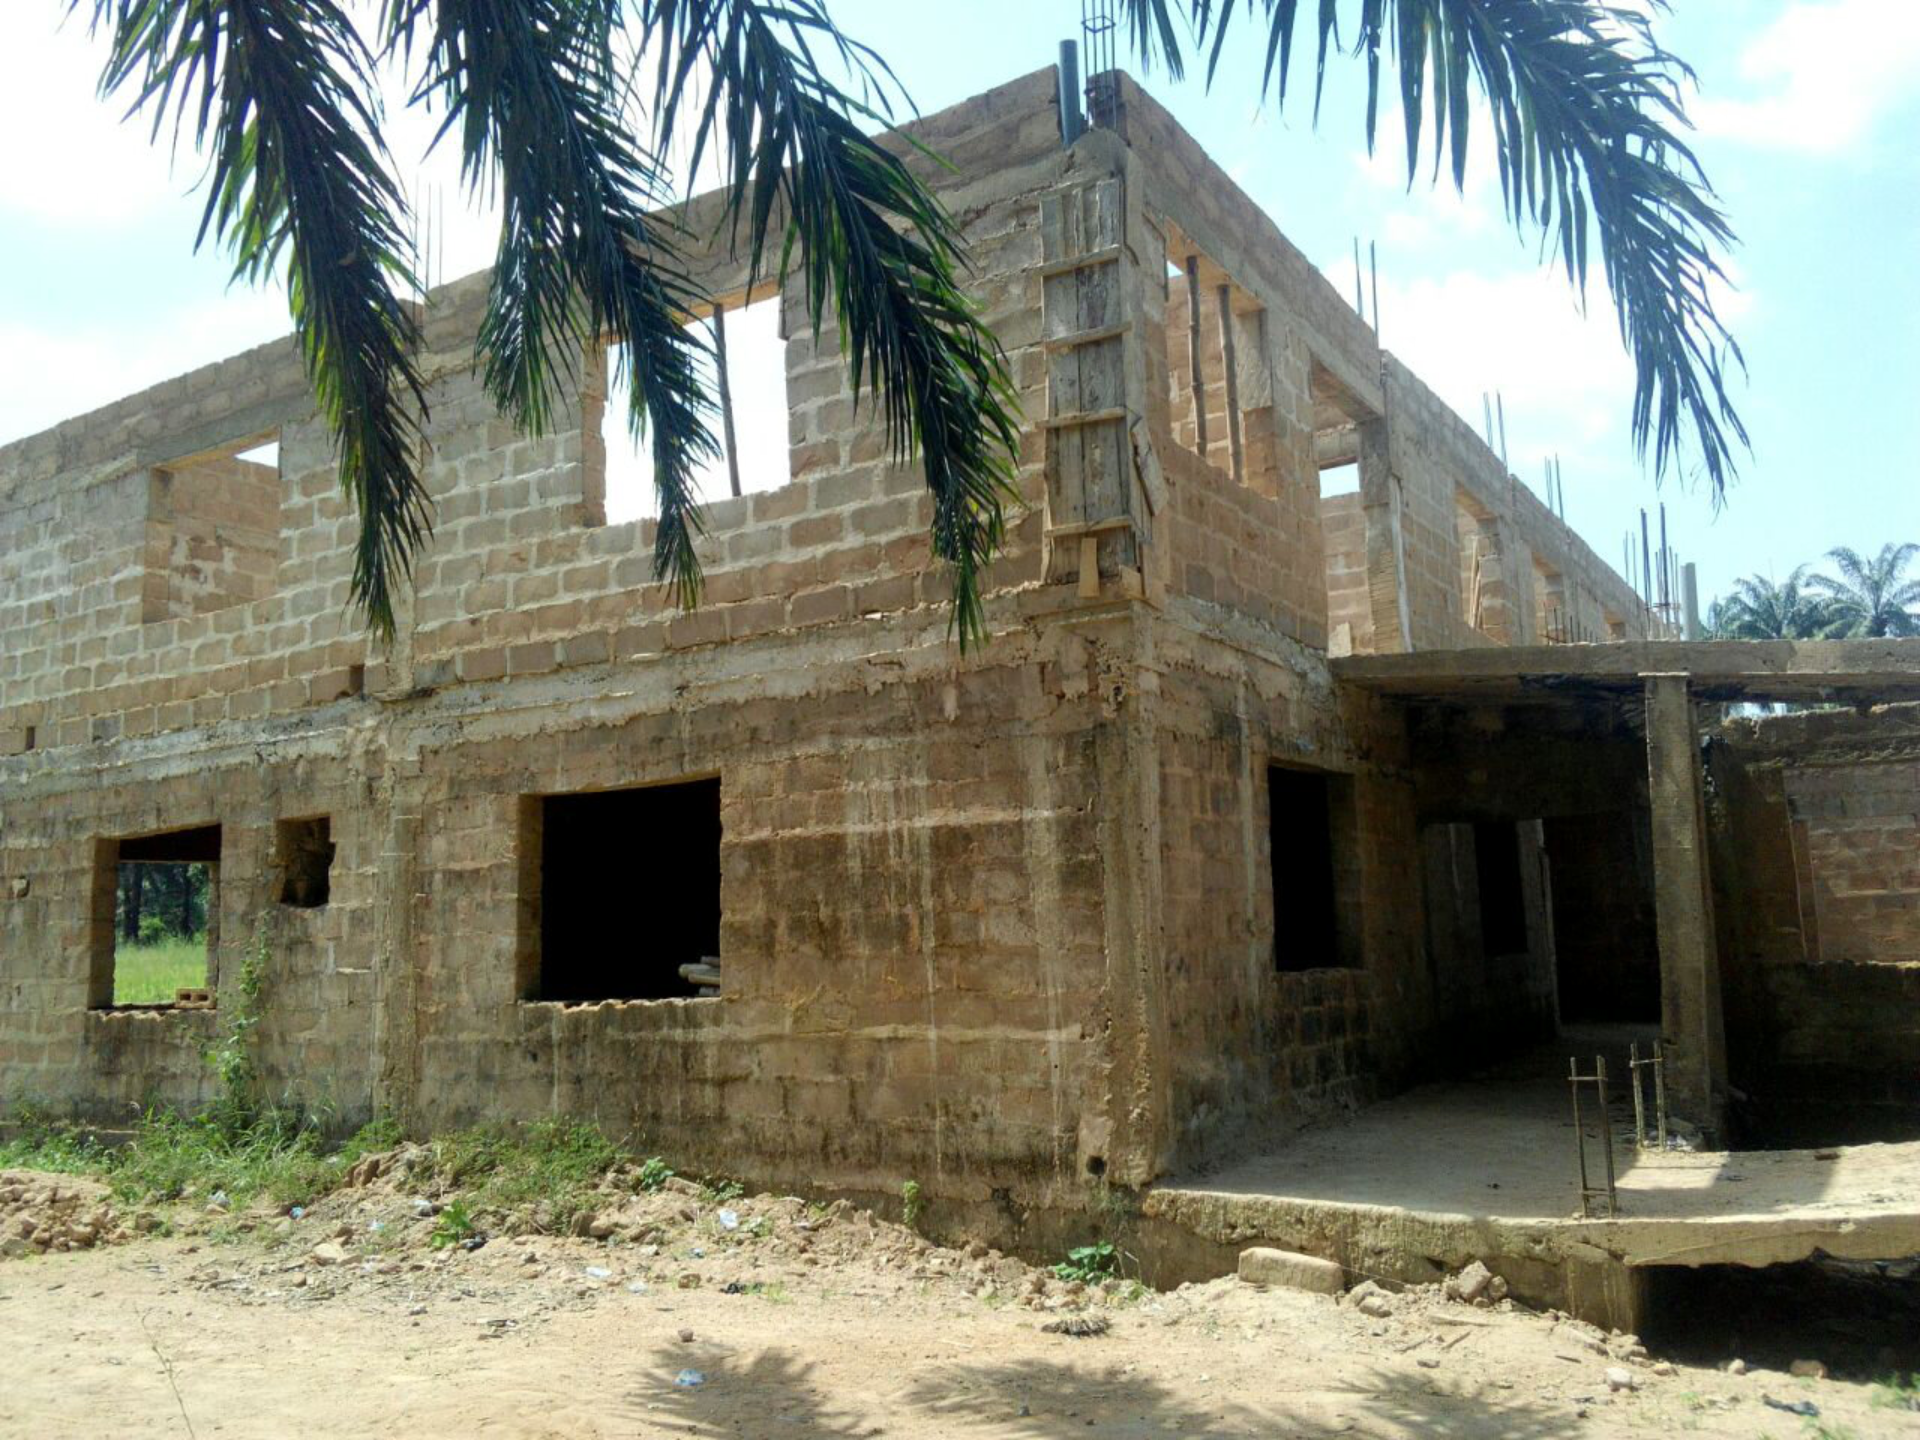 an ongoing housing construction